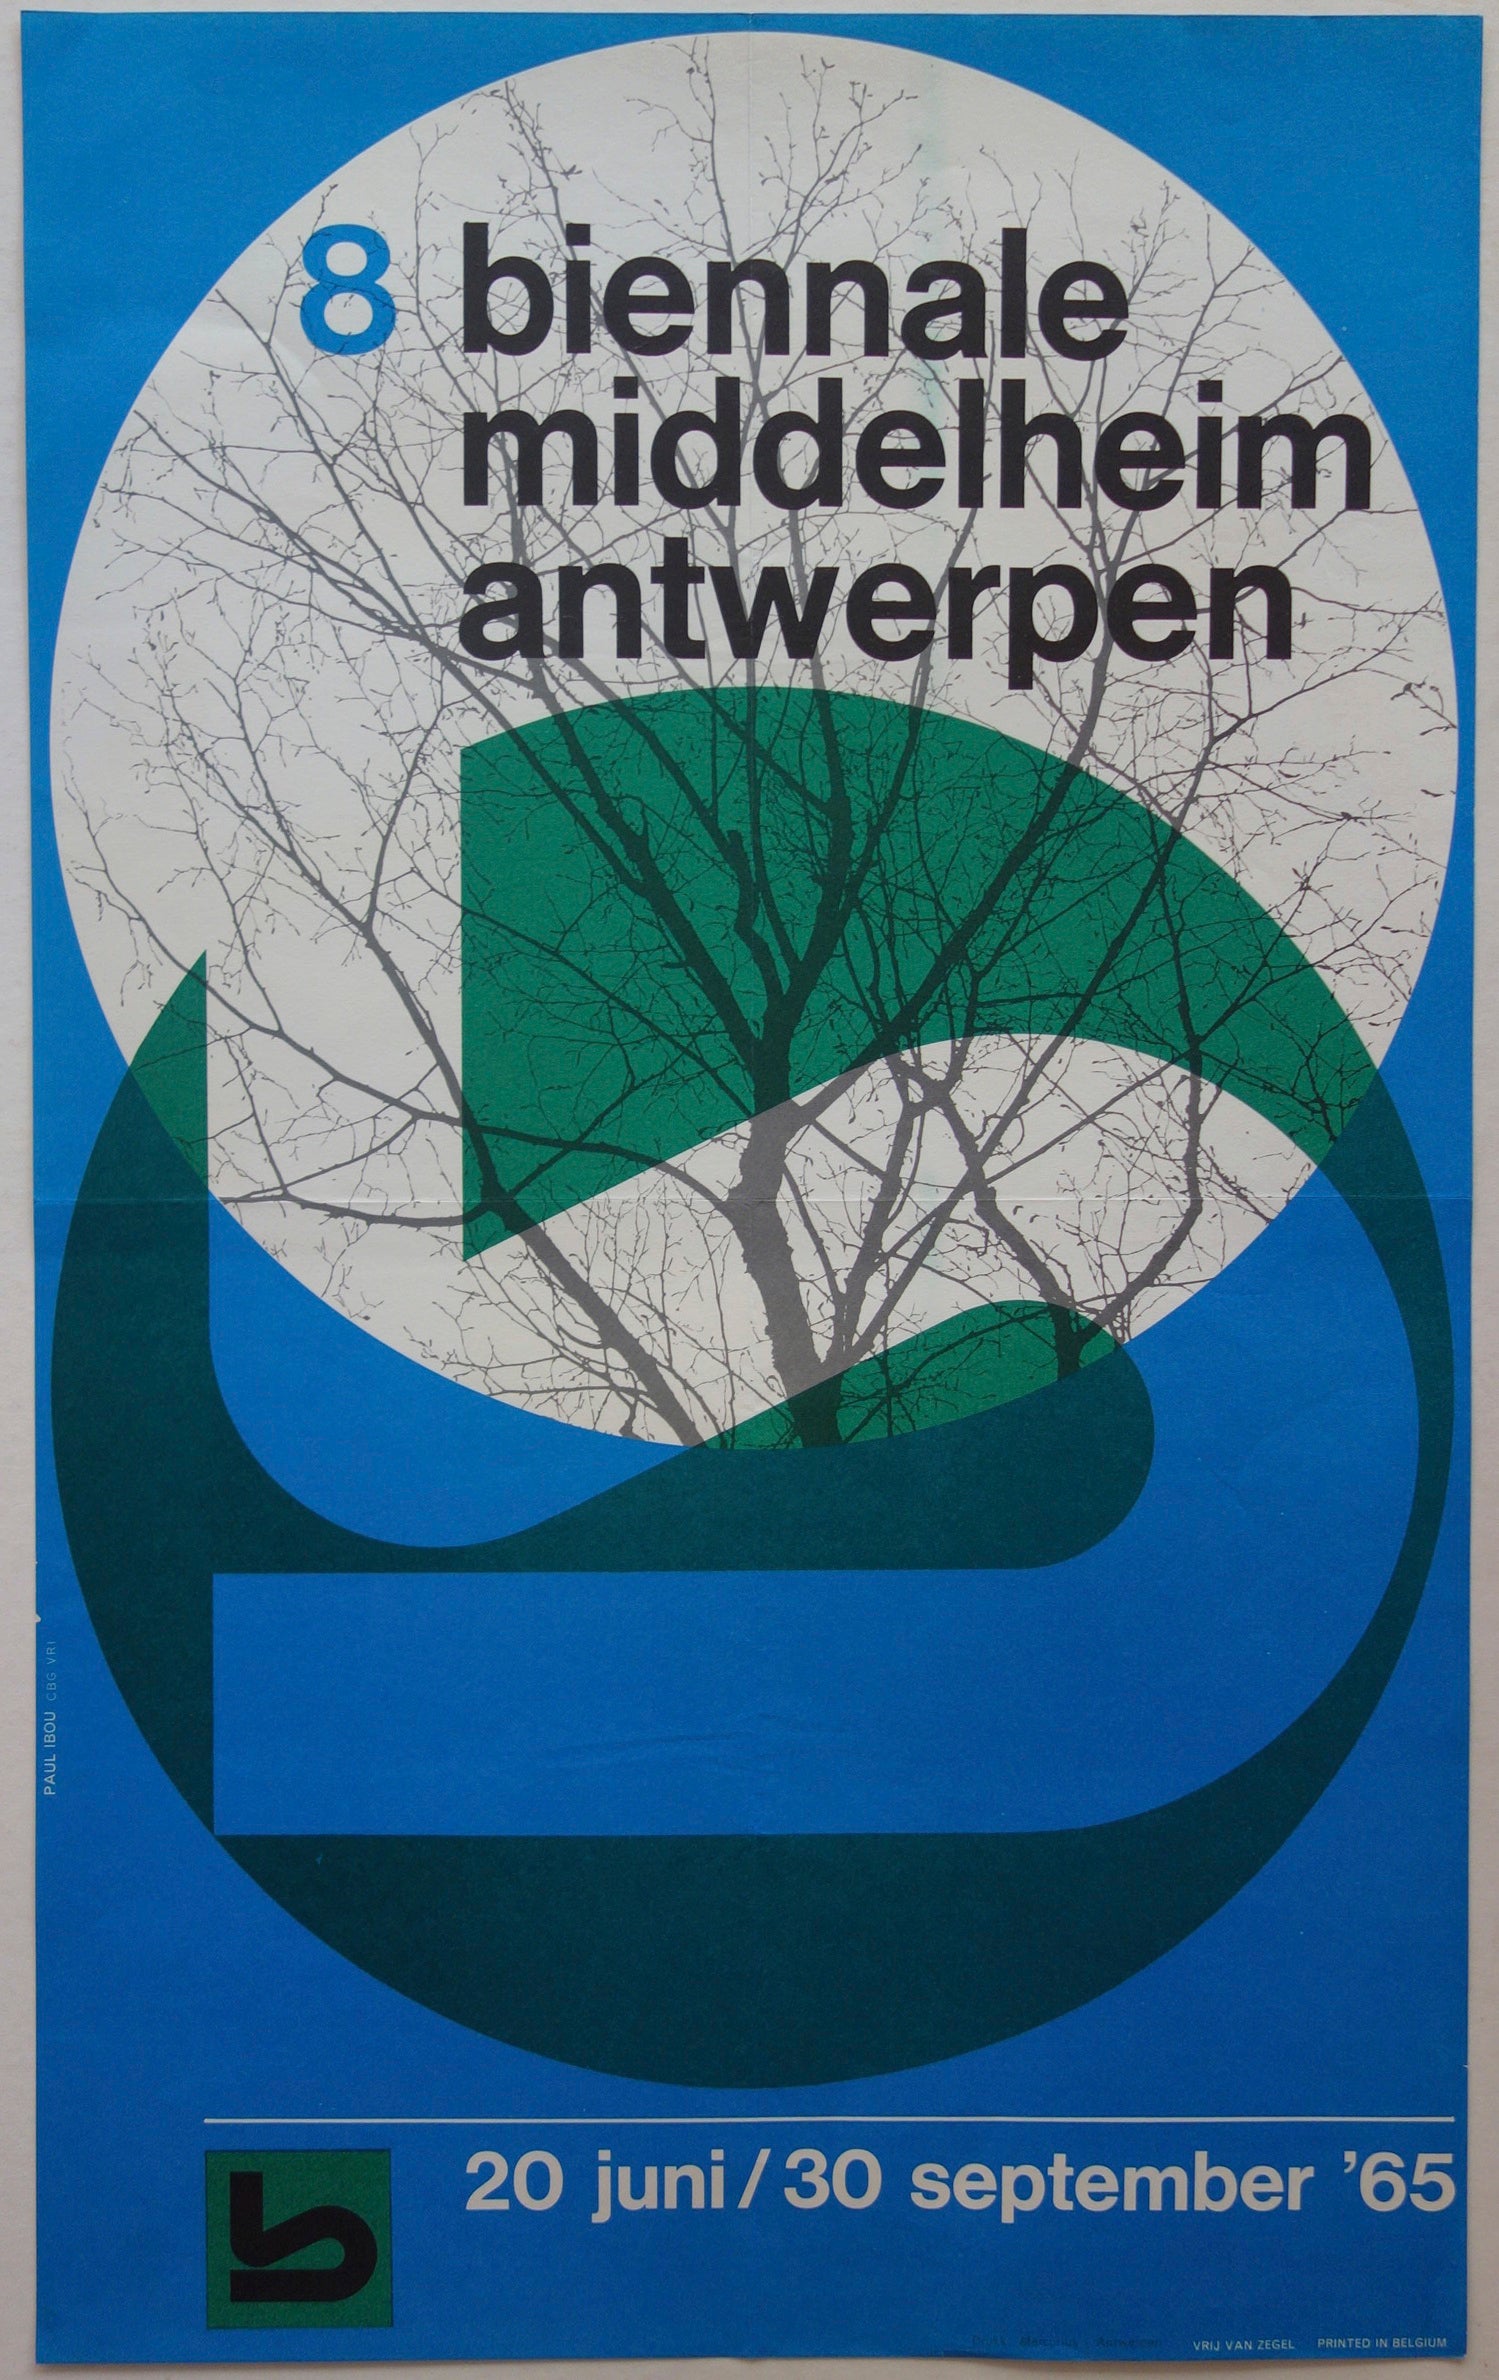 8 Biennale Middelheim Antwerpen